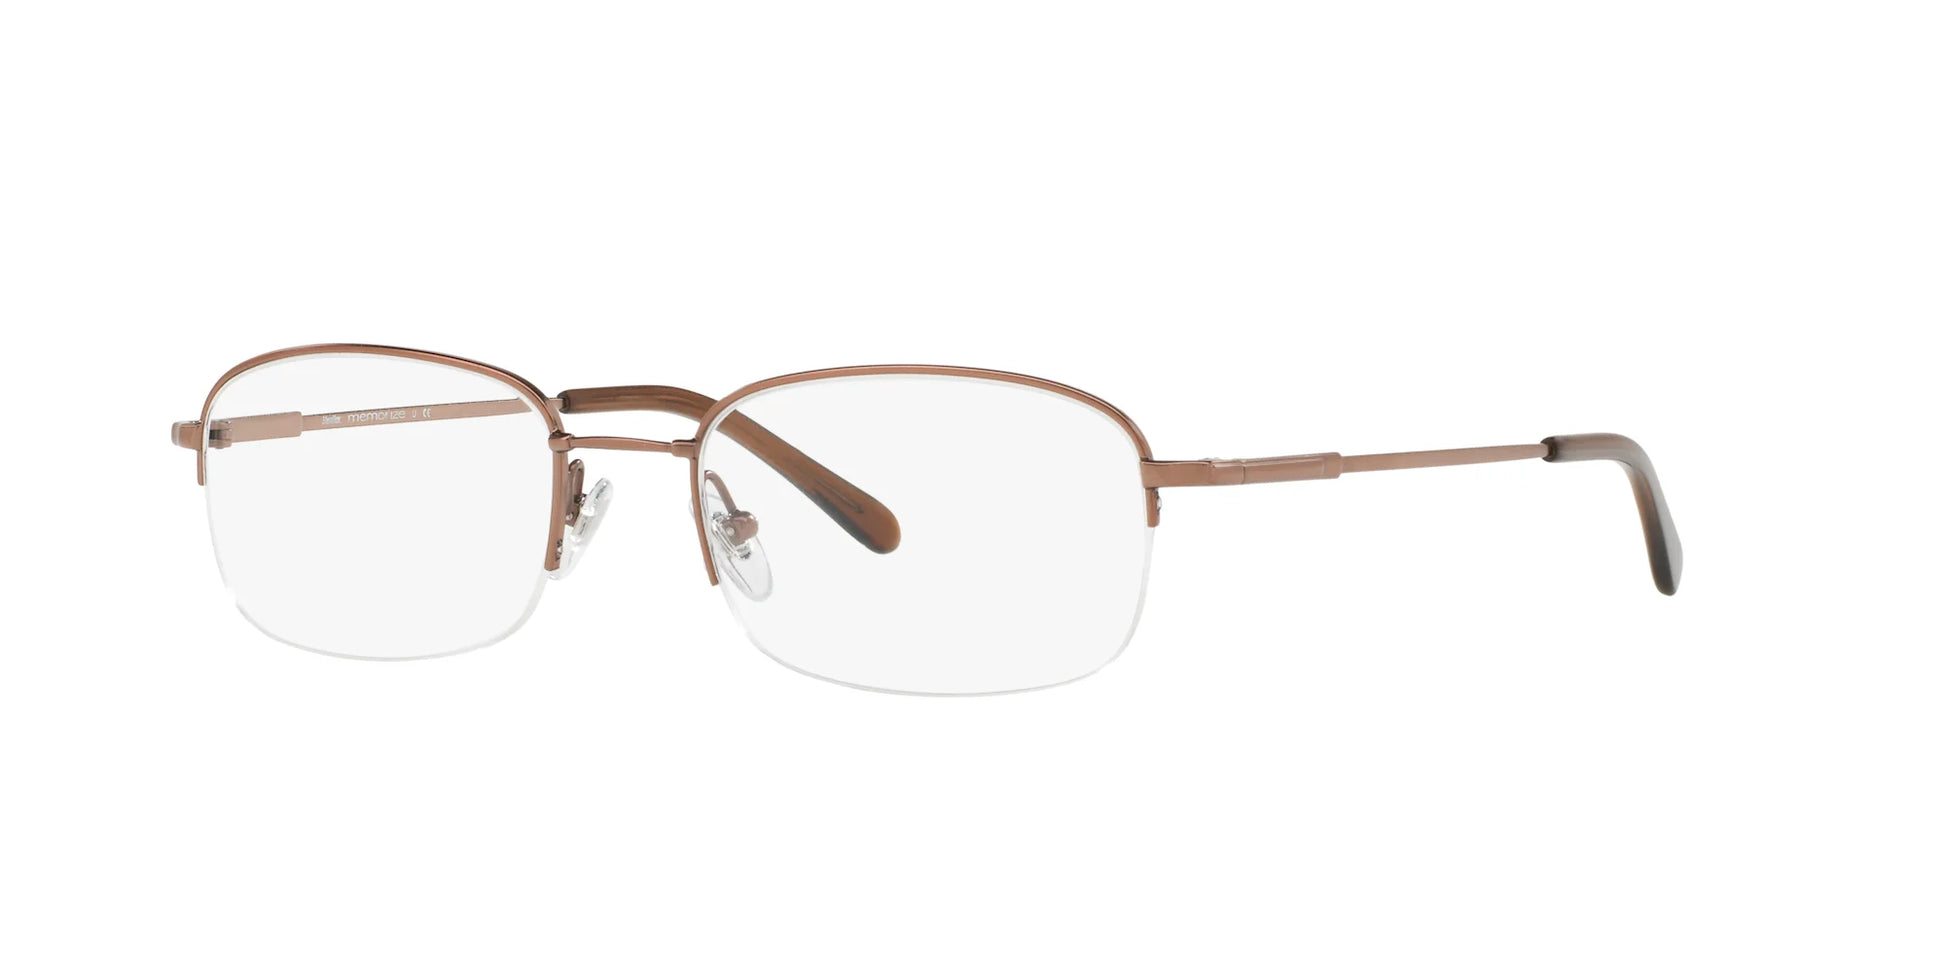 Sferoflex SF9001 Eyeglasses Matte Copper